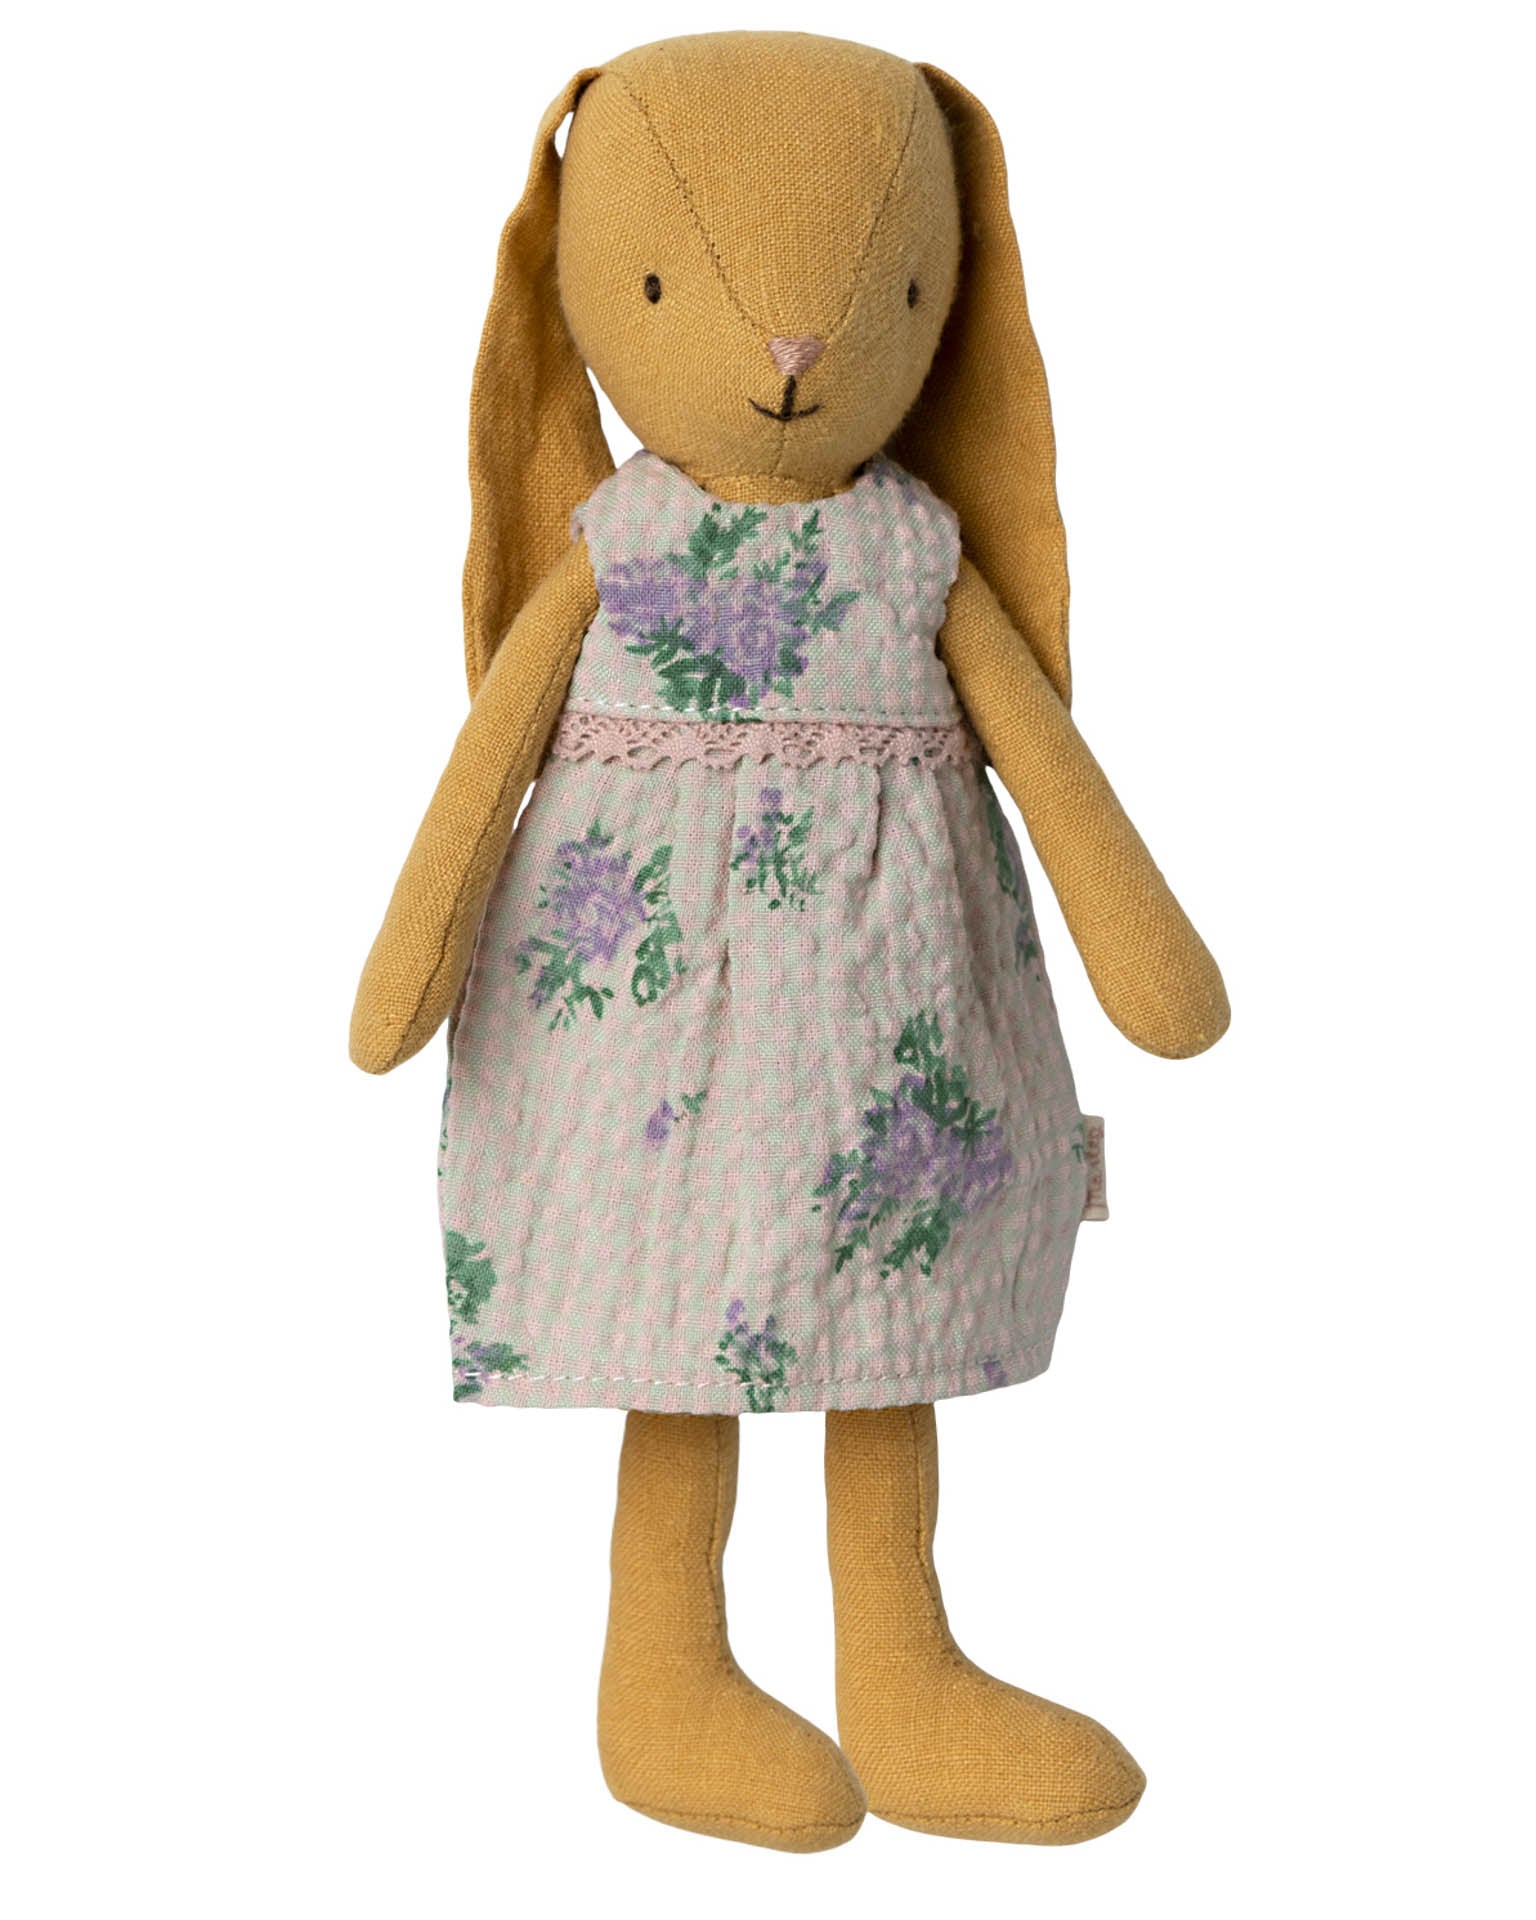 size 1 bunny in dusty yellow dress